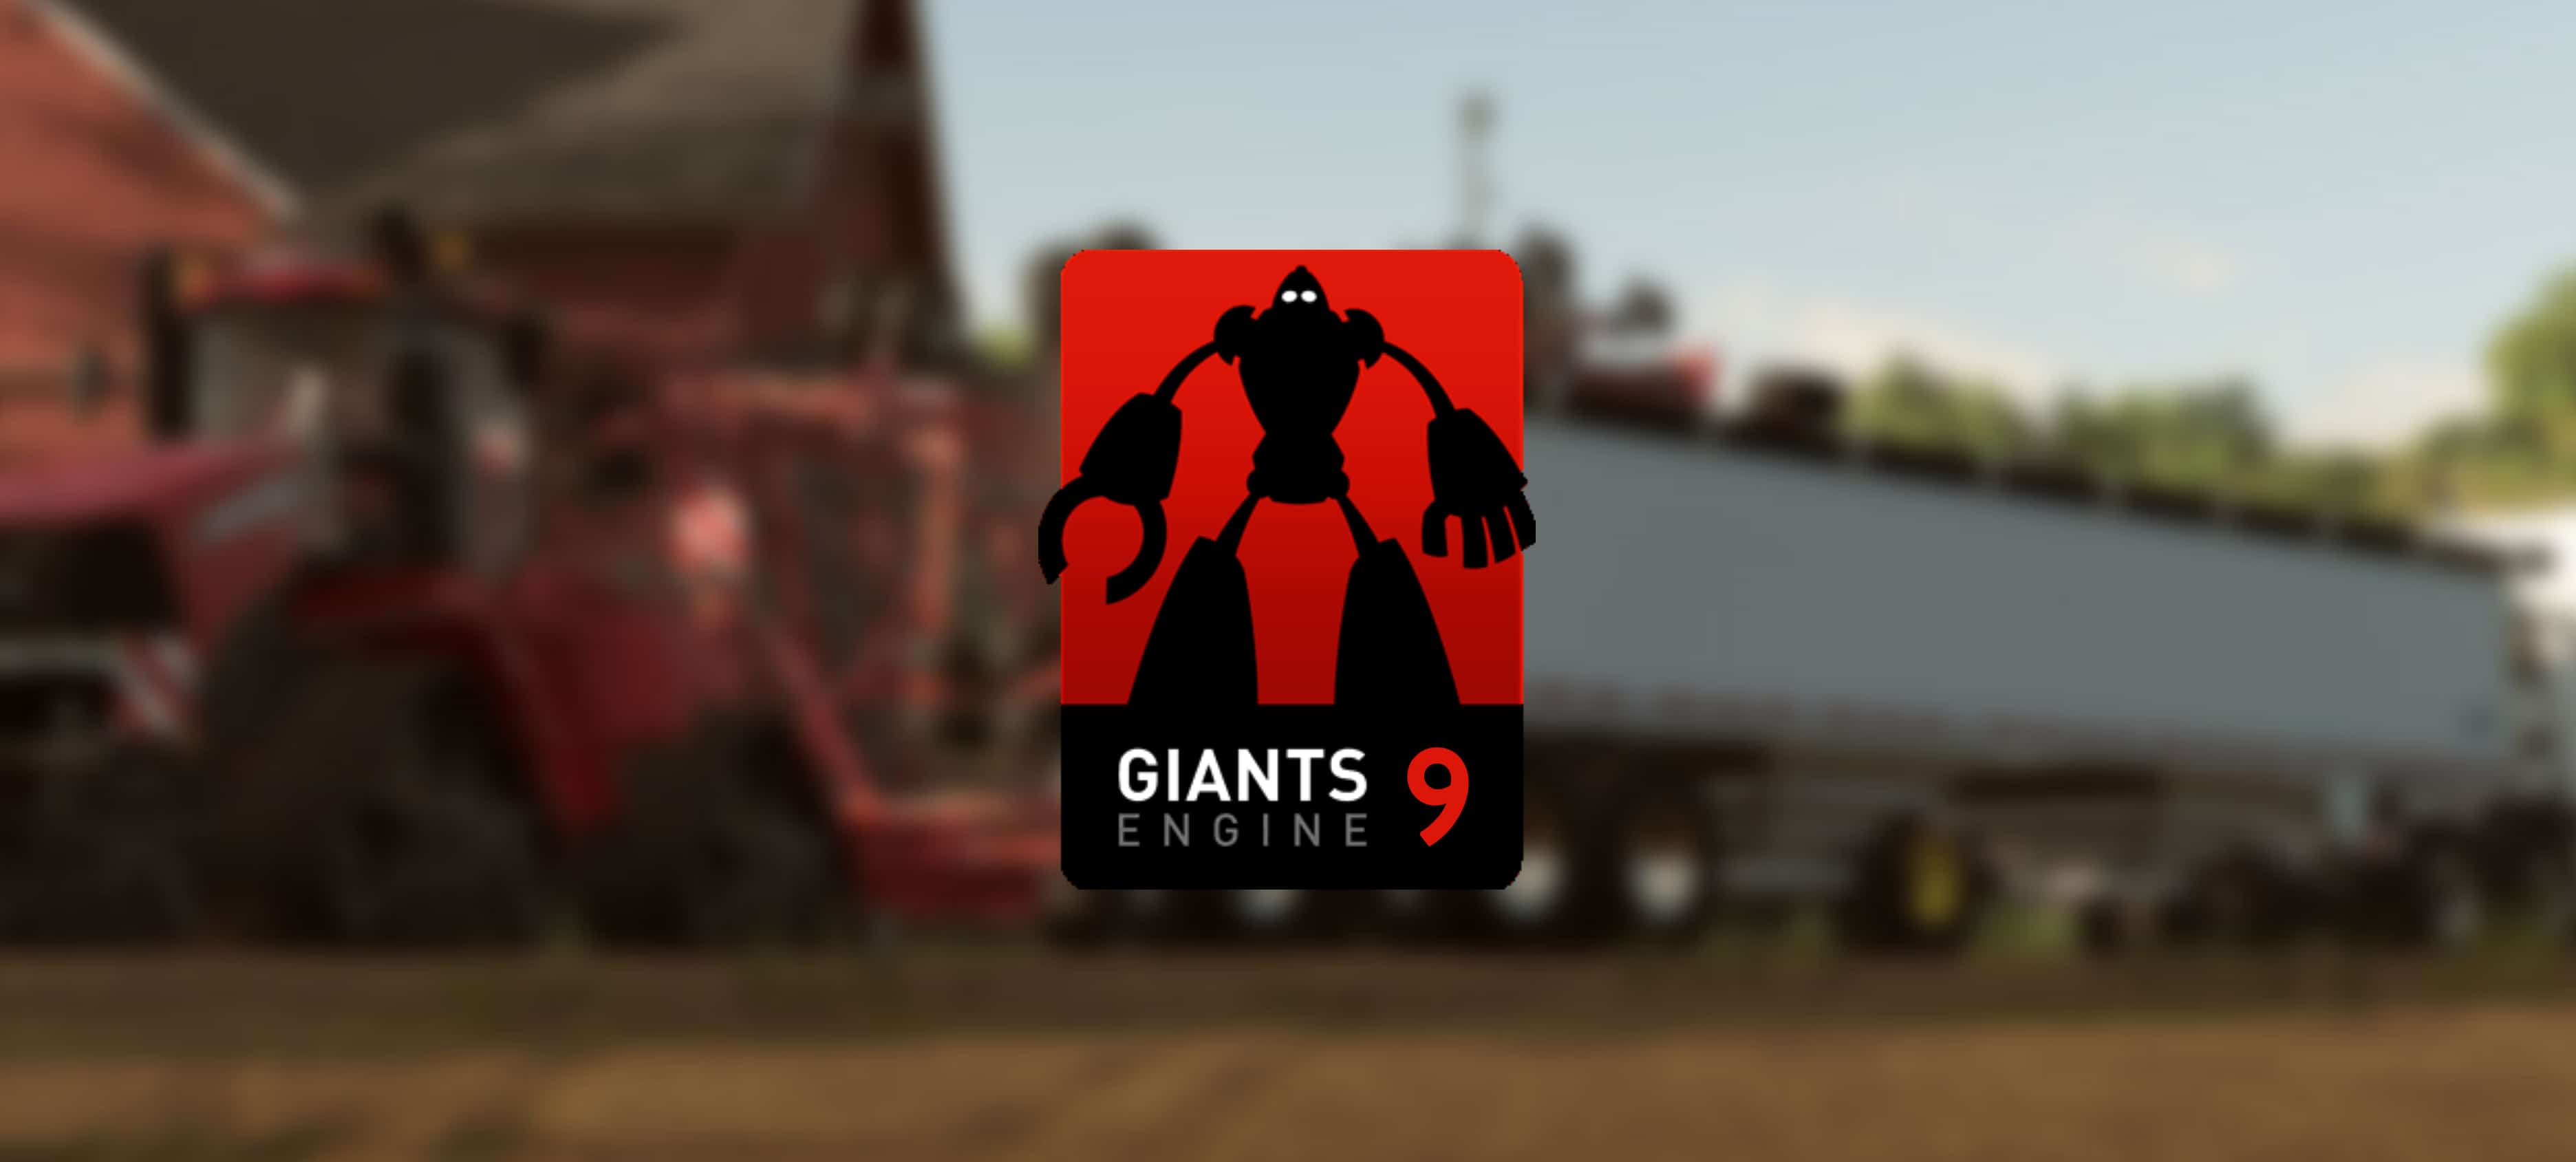 Giants Editor FS22 - Giants Editor 9 - Farming Simulator 22 Giants Editor